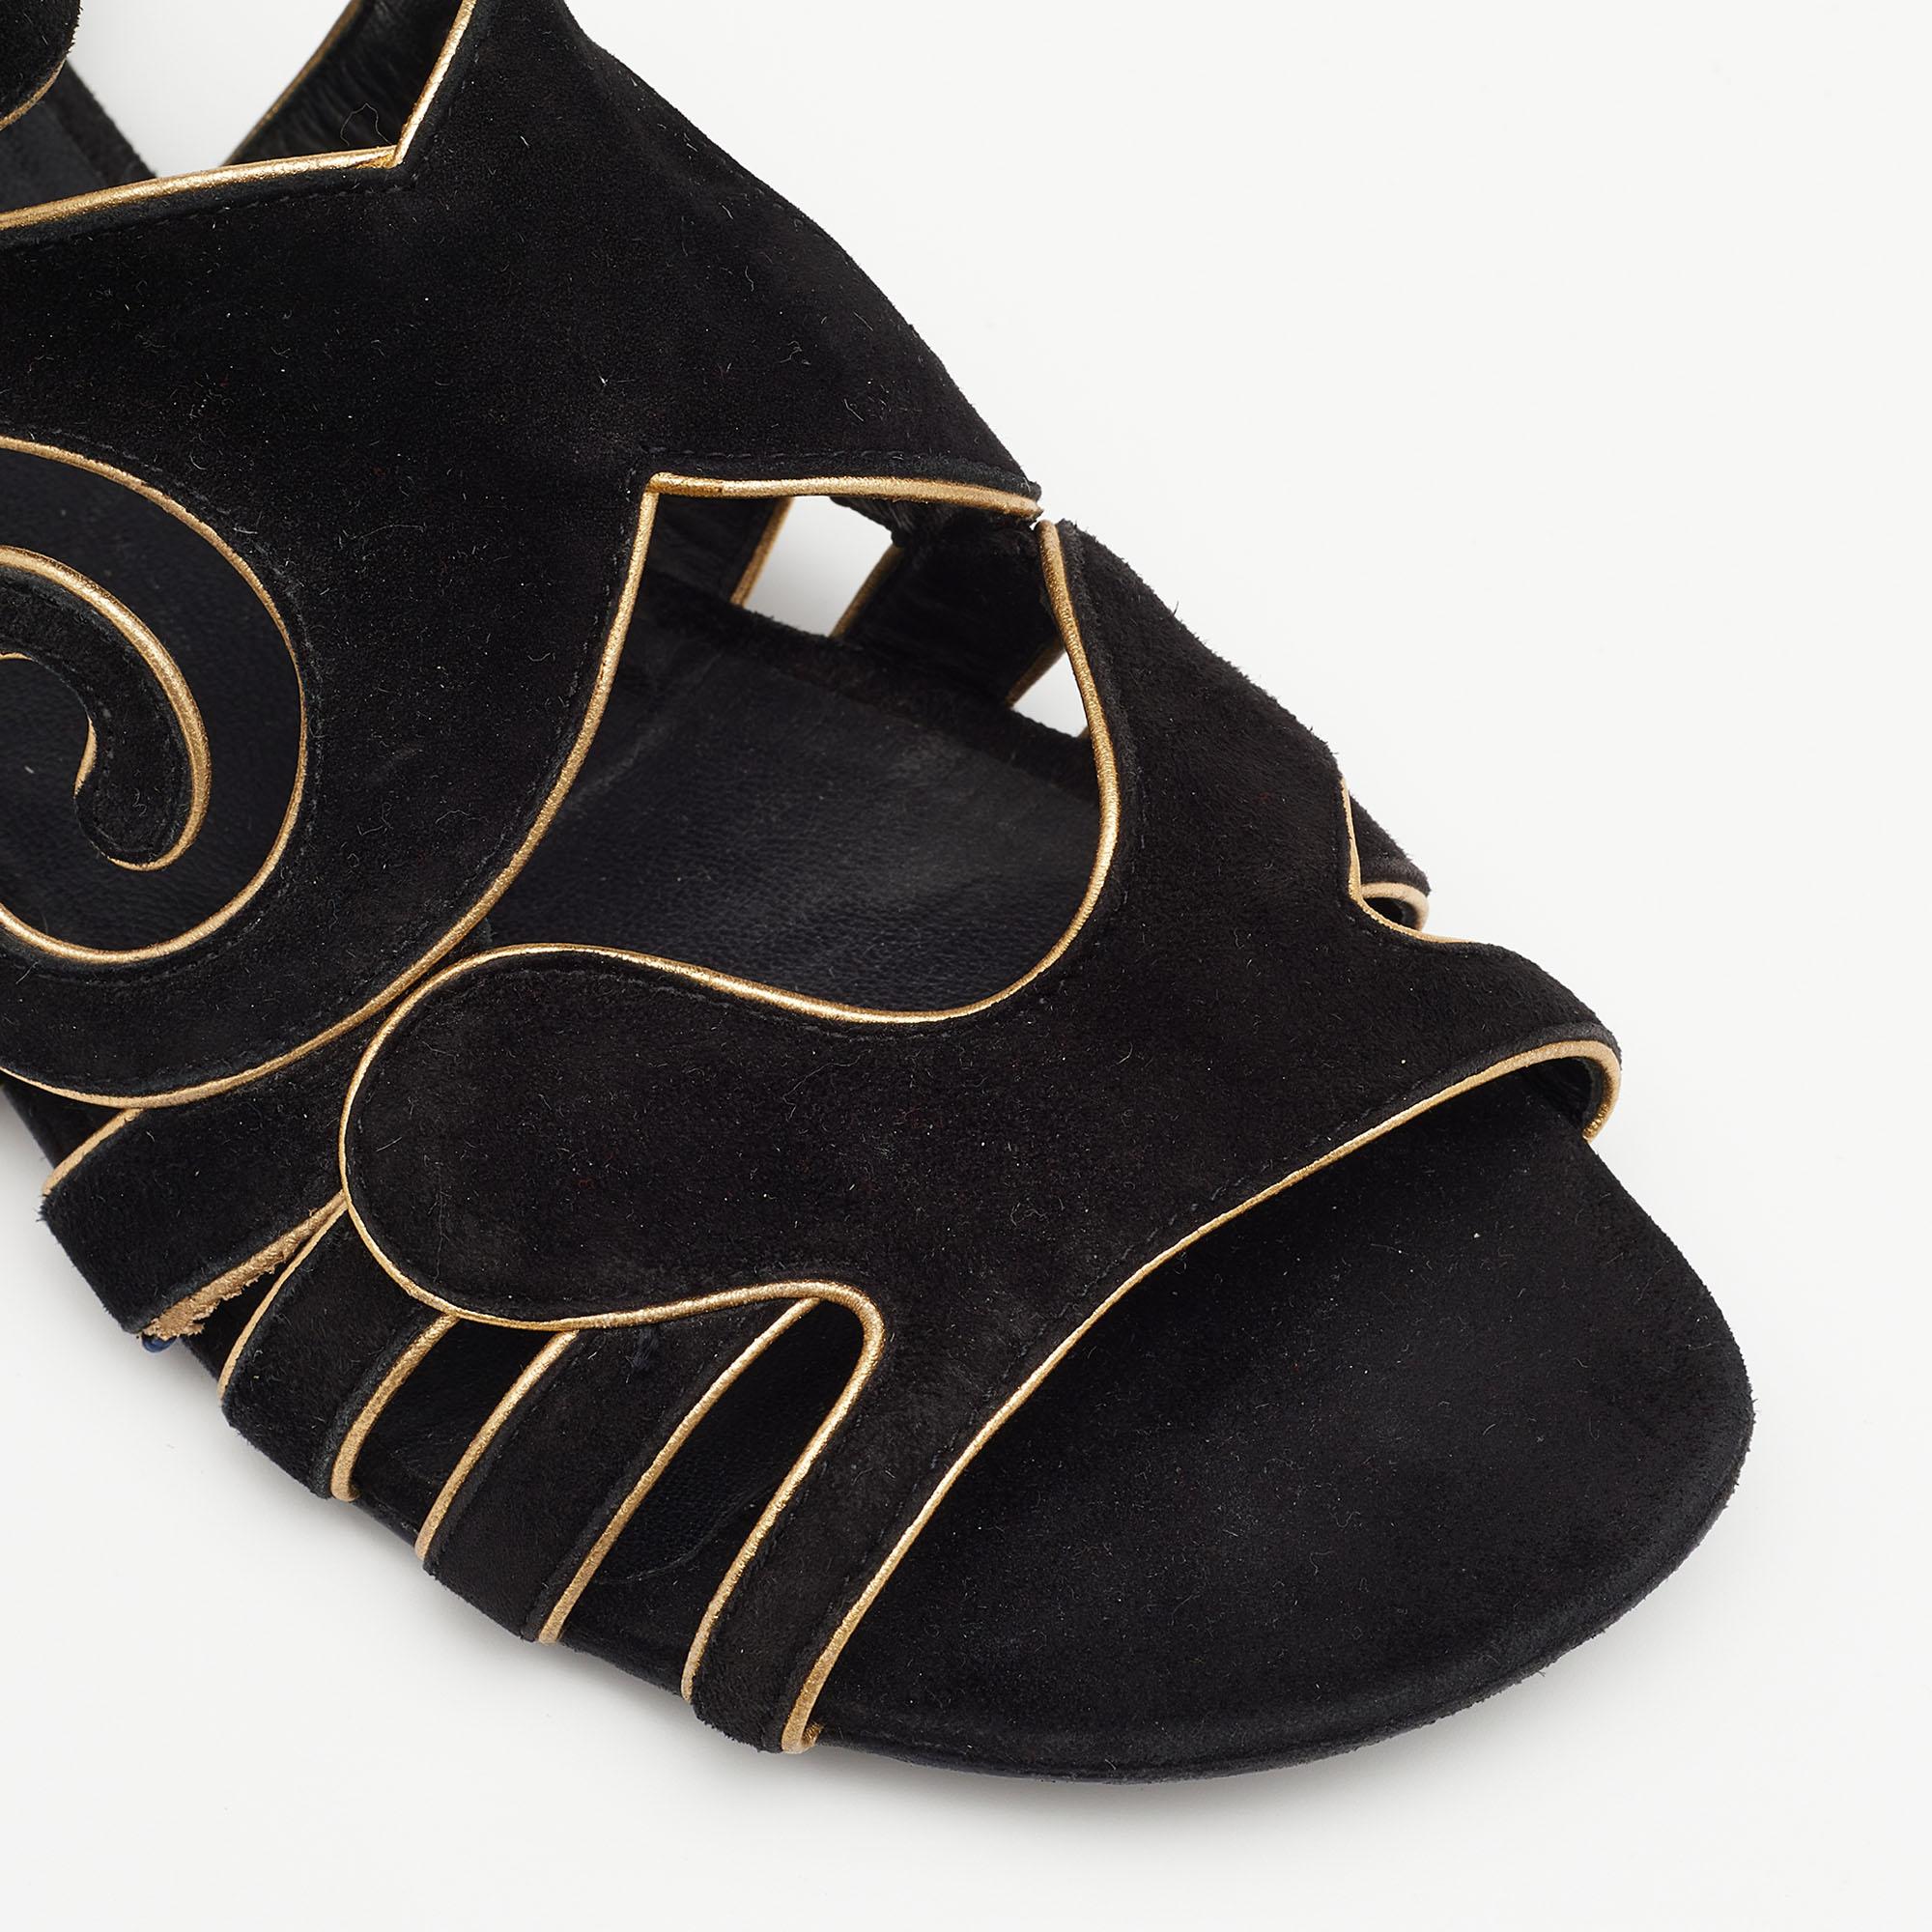 Chanel Black/Gold Suede Gladiator Flat Sandals Size 38.5 3